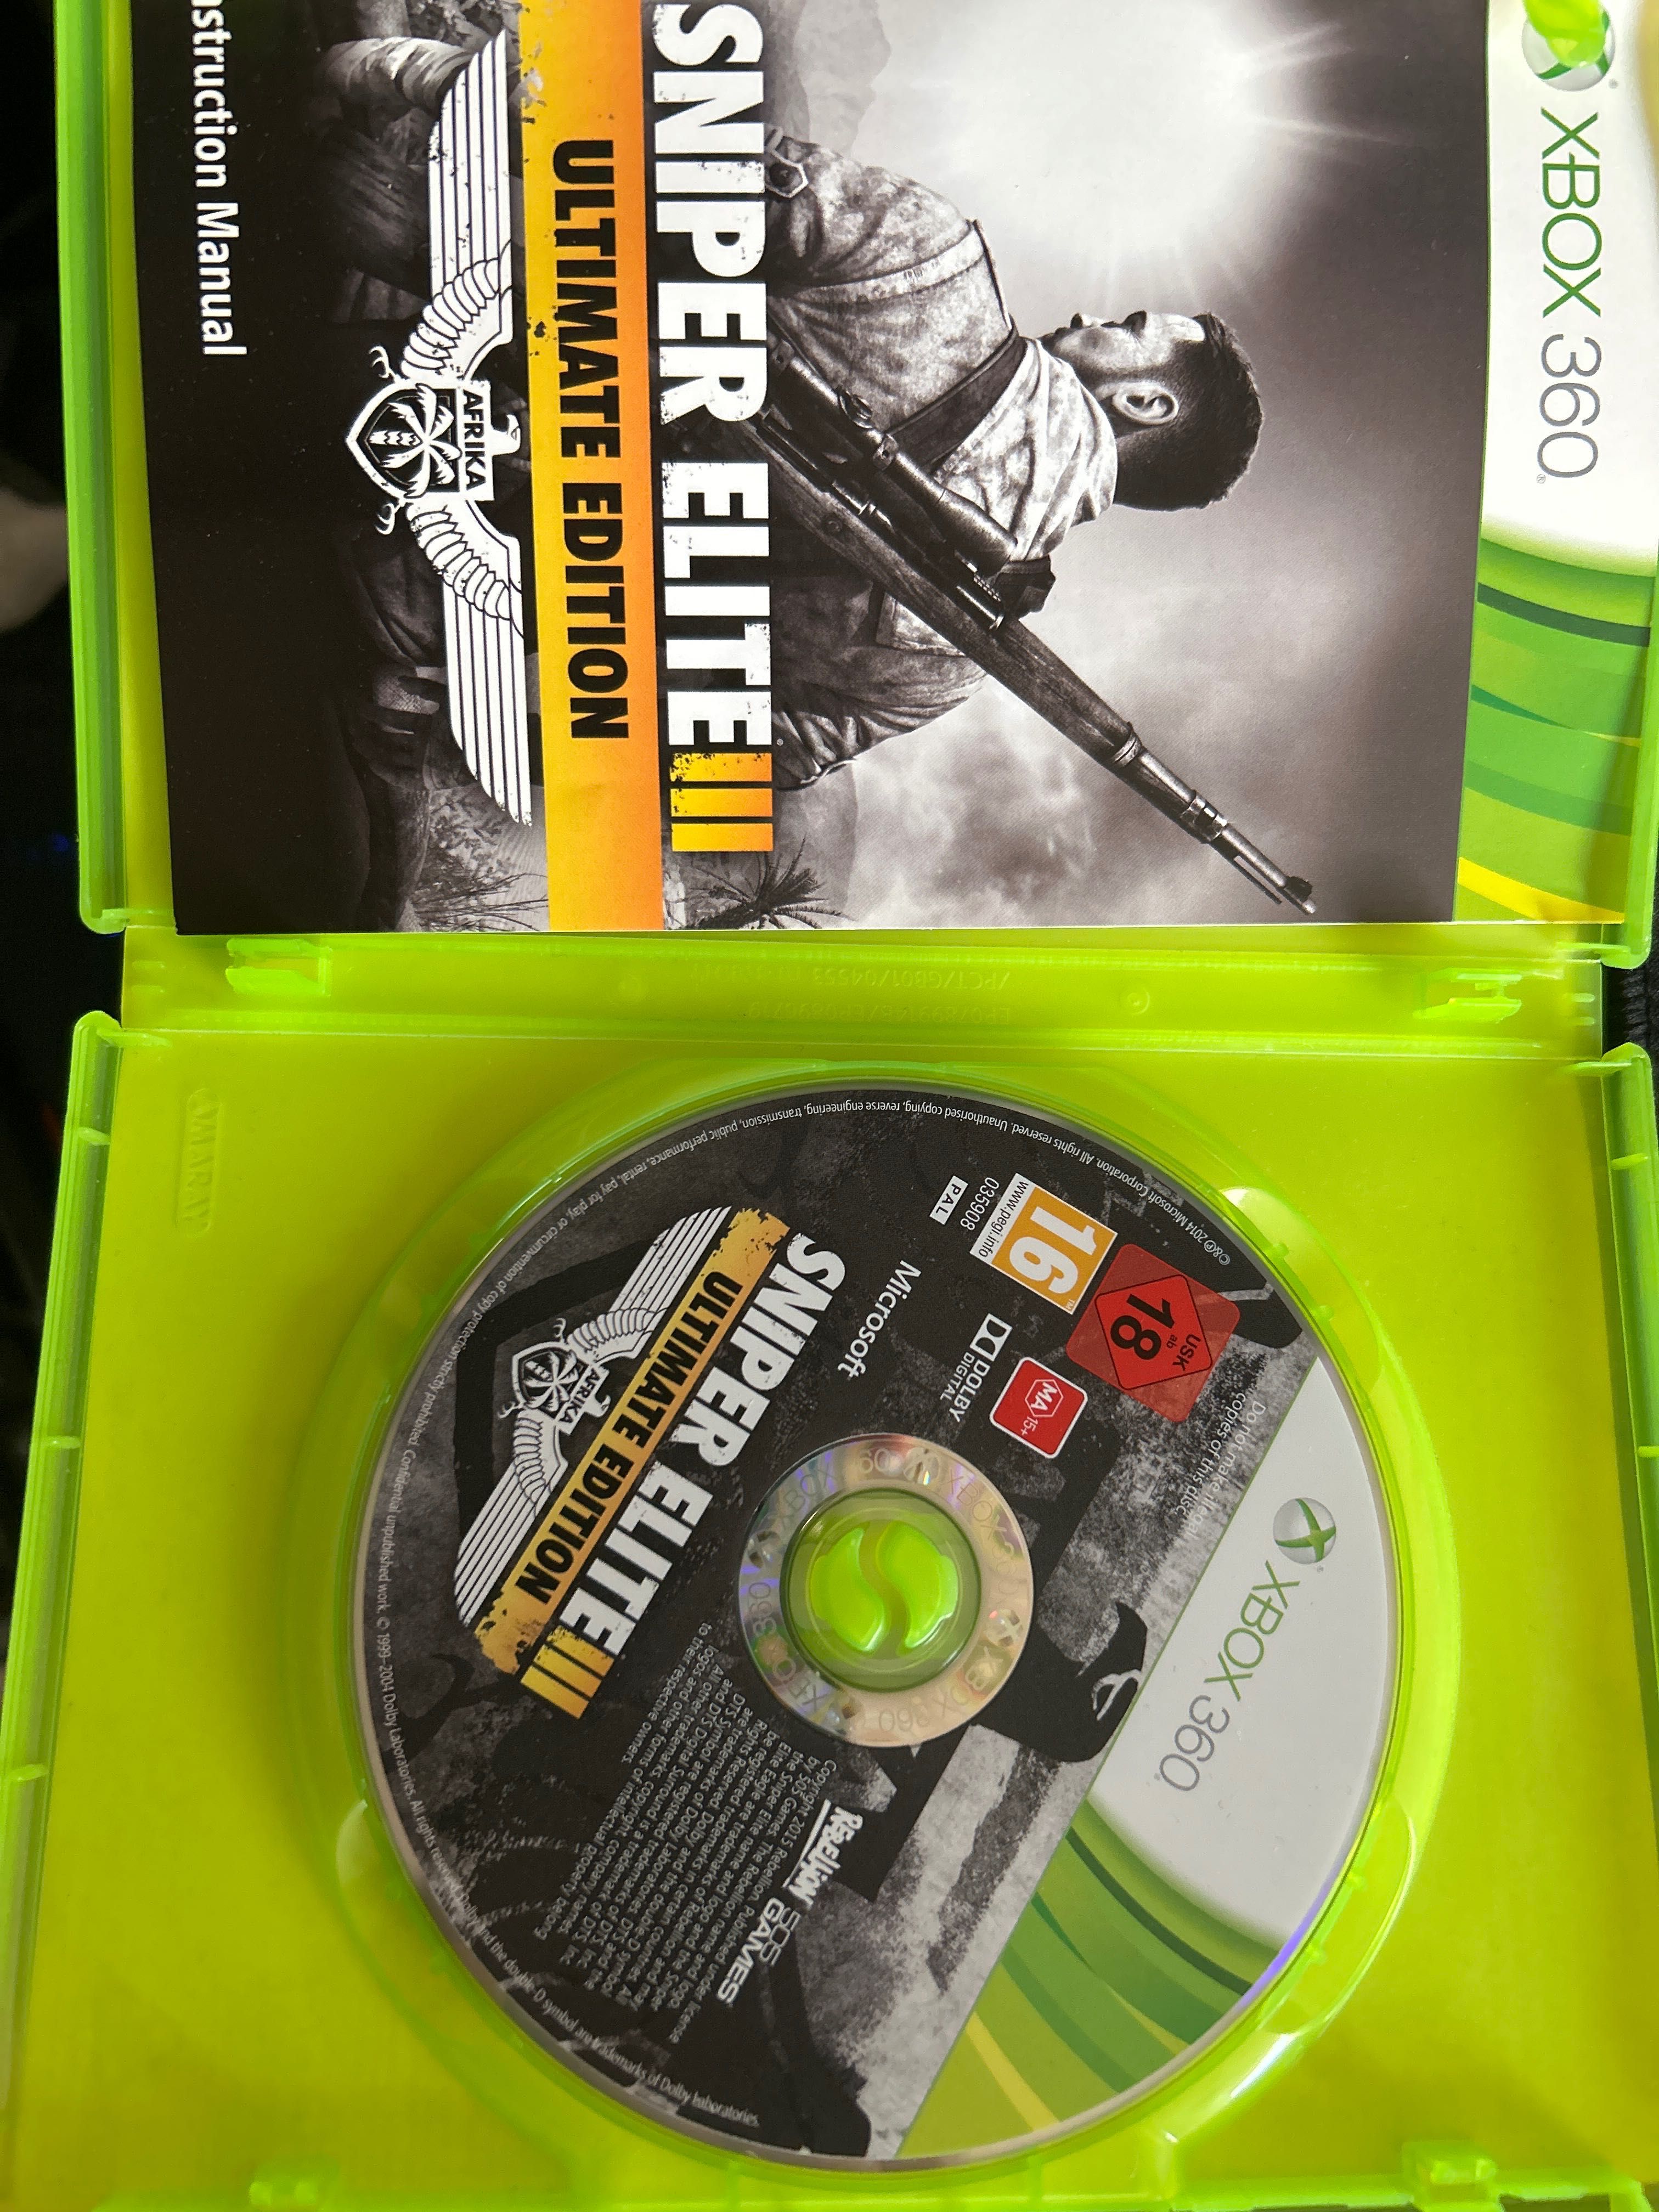 Sniper Elite ||| Xbox 360